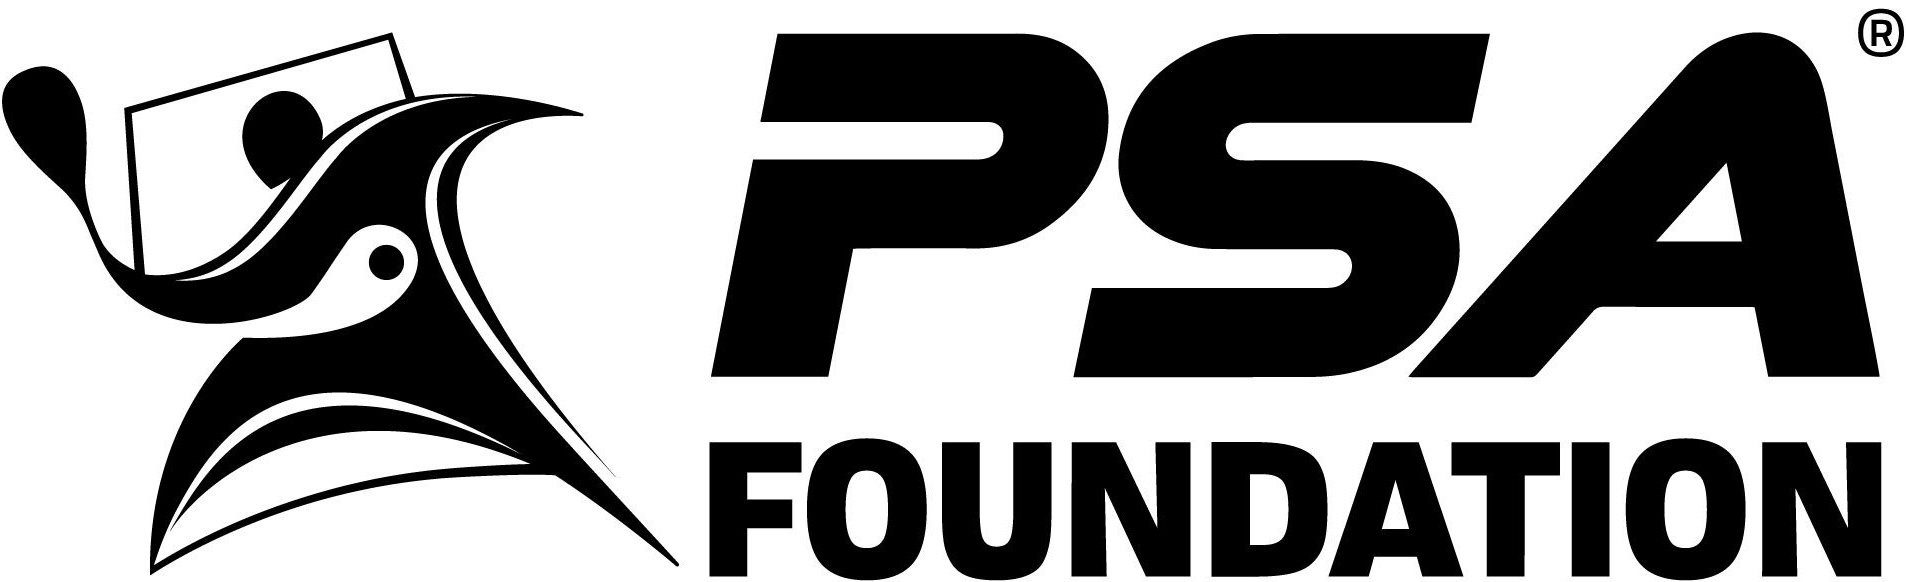 PSA Foundation logo